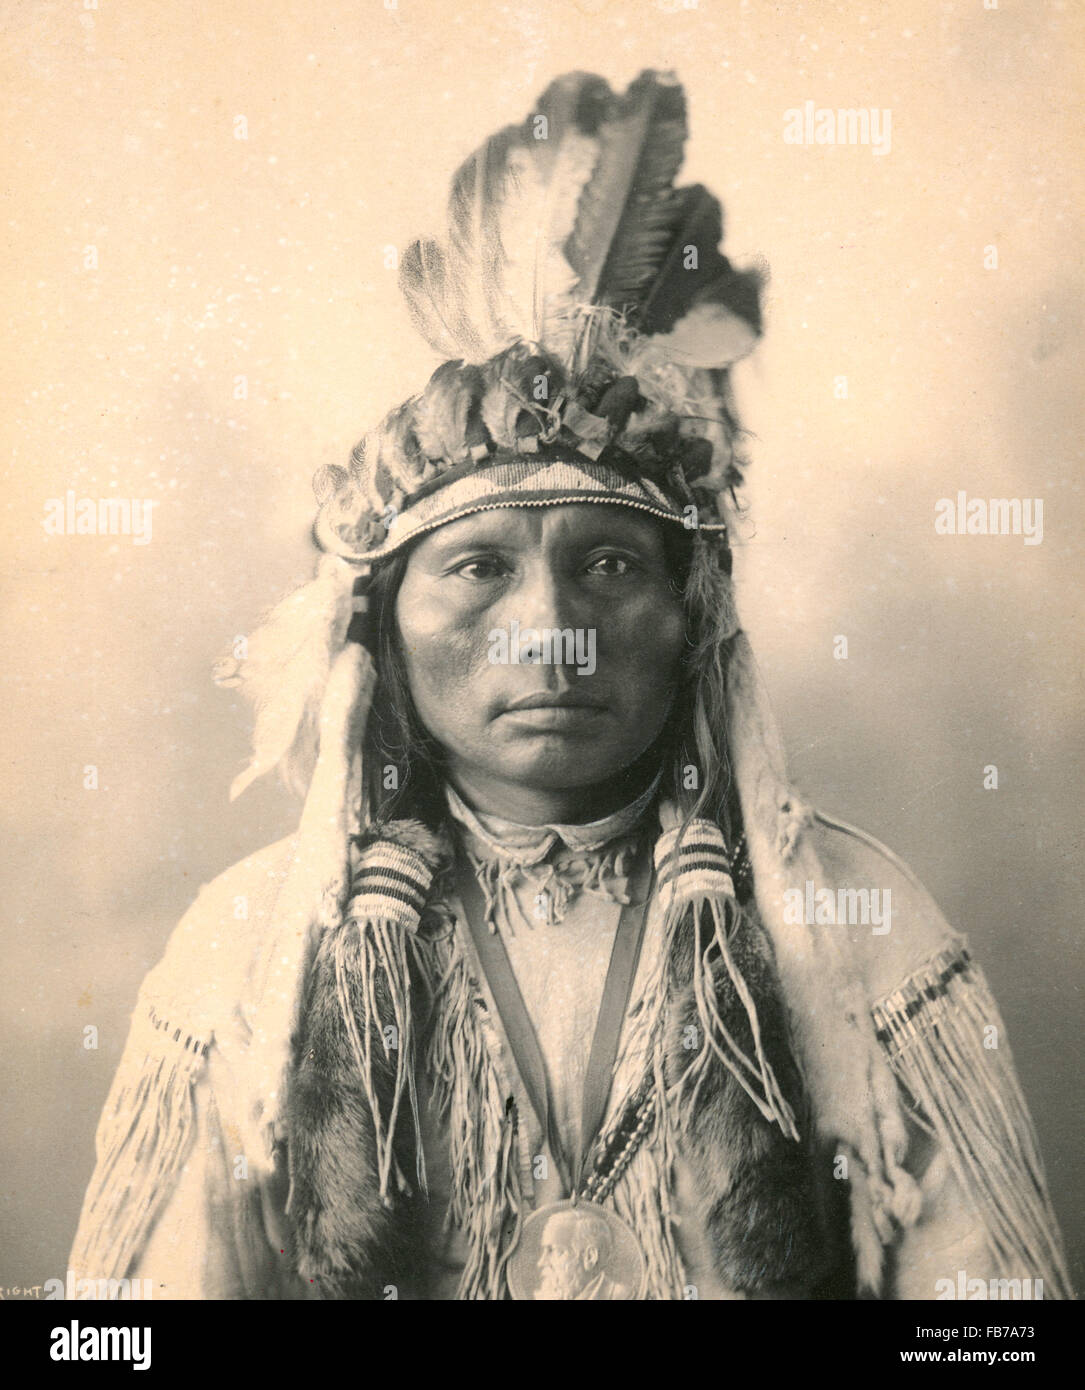 Native American Indian, Three Fingers, Cheyenne Indian Stock Photo